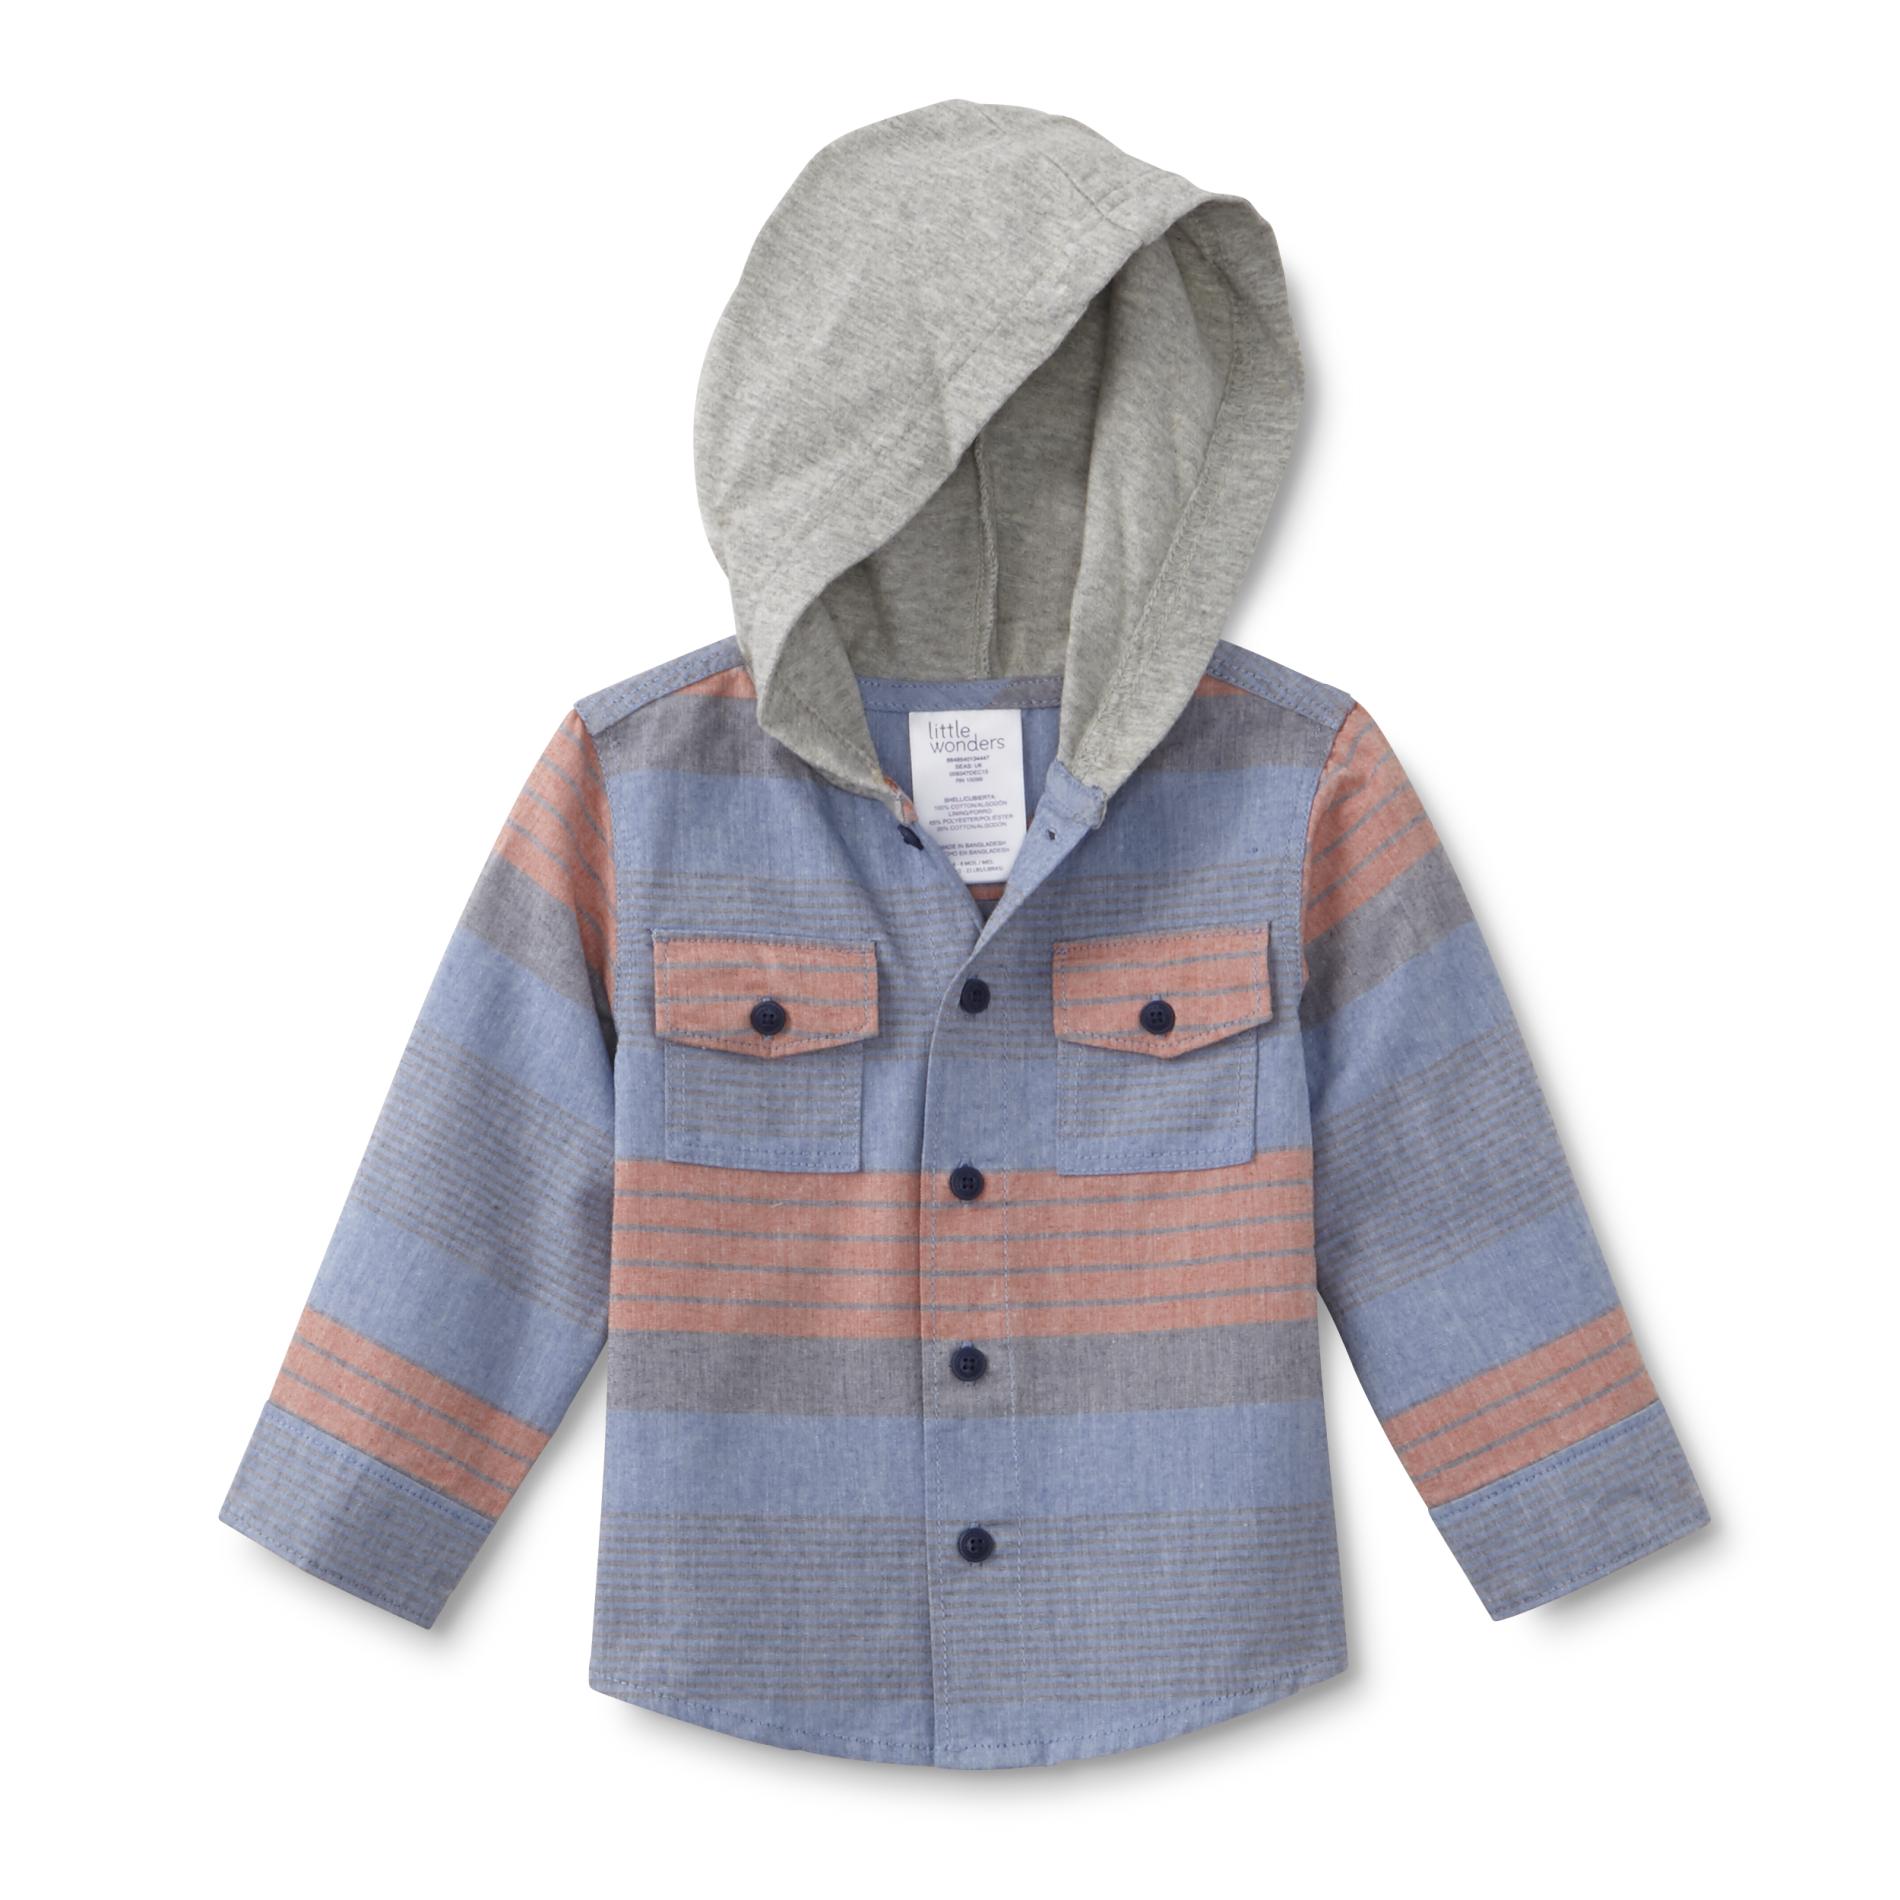 Little Wonders Newborn & Infant Boy's Hooded Shirt - Striped